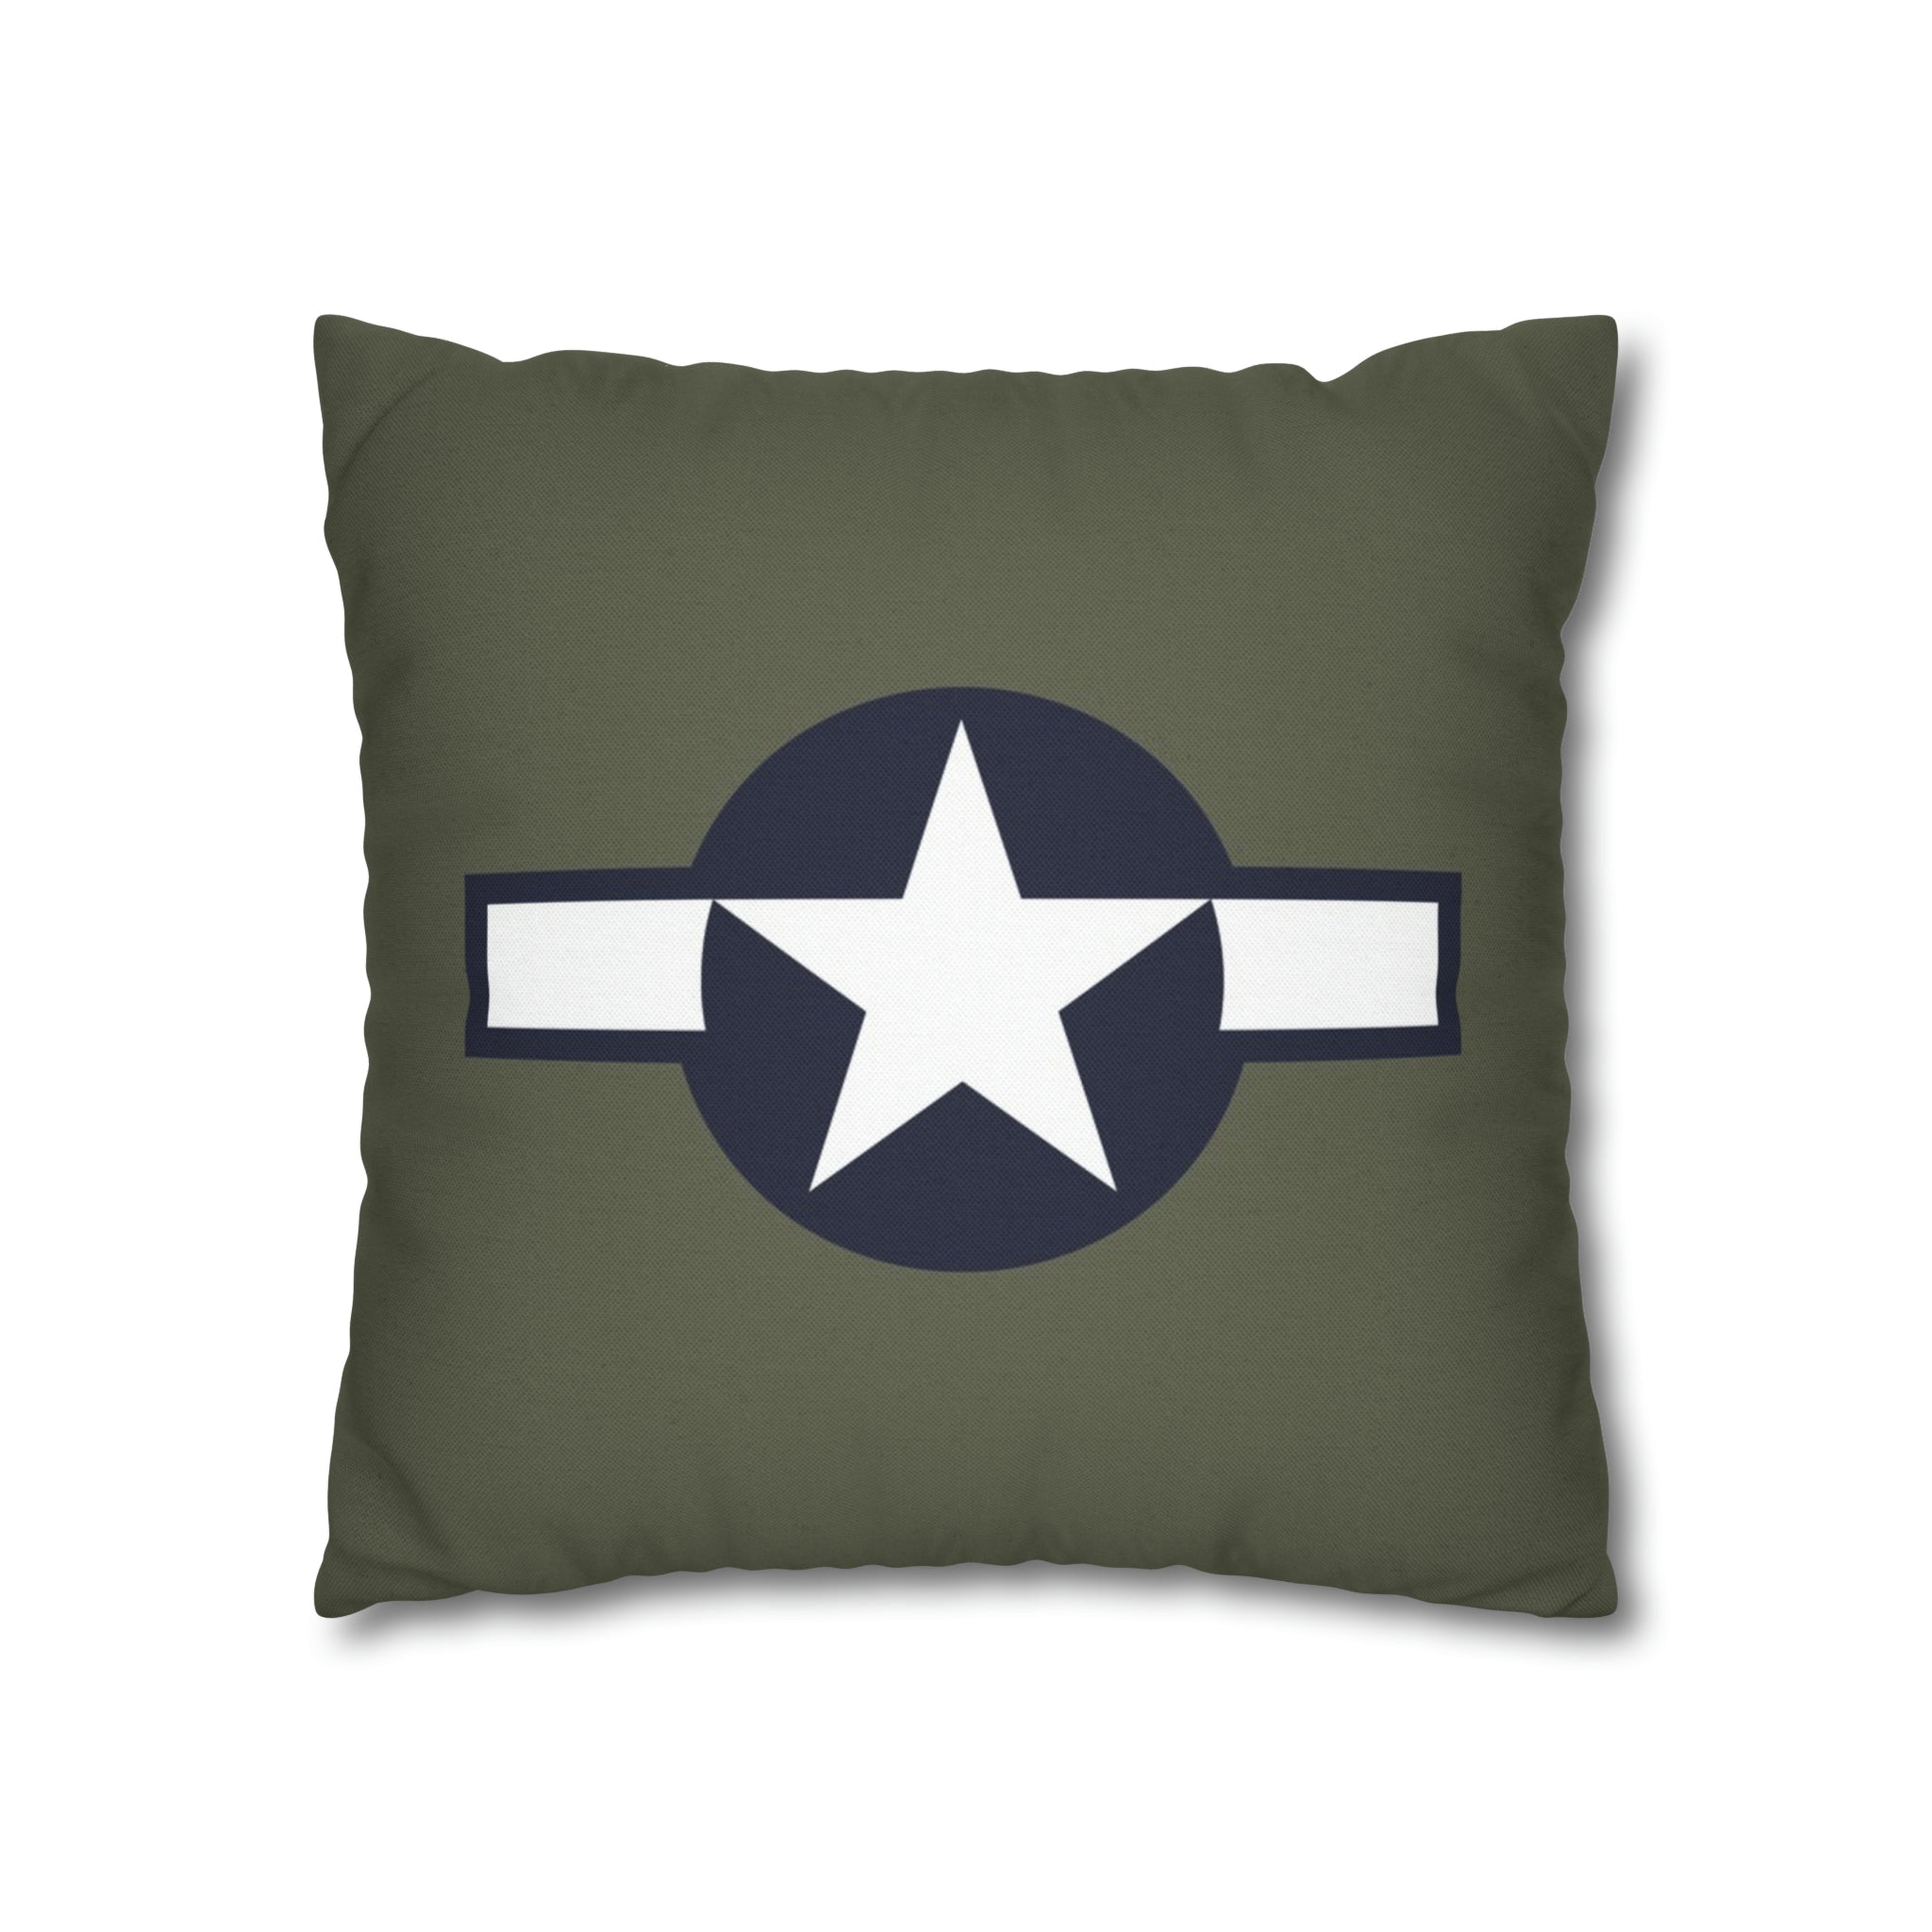 WWII USAAF "Star & Bar" Roundel Square Pillowcase - I Love a Hangar